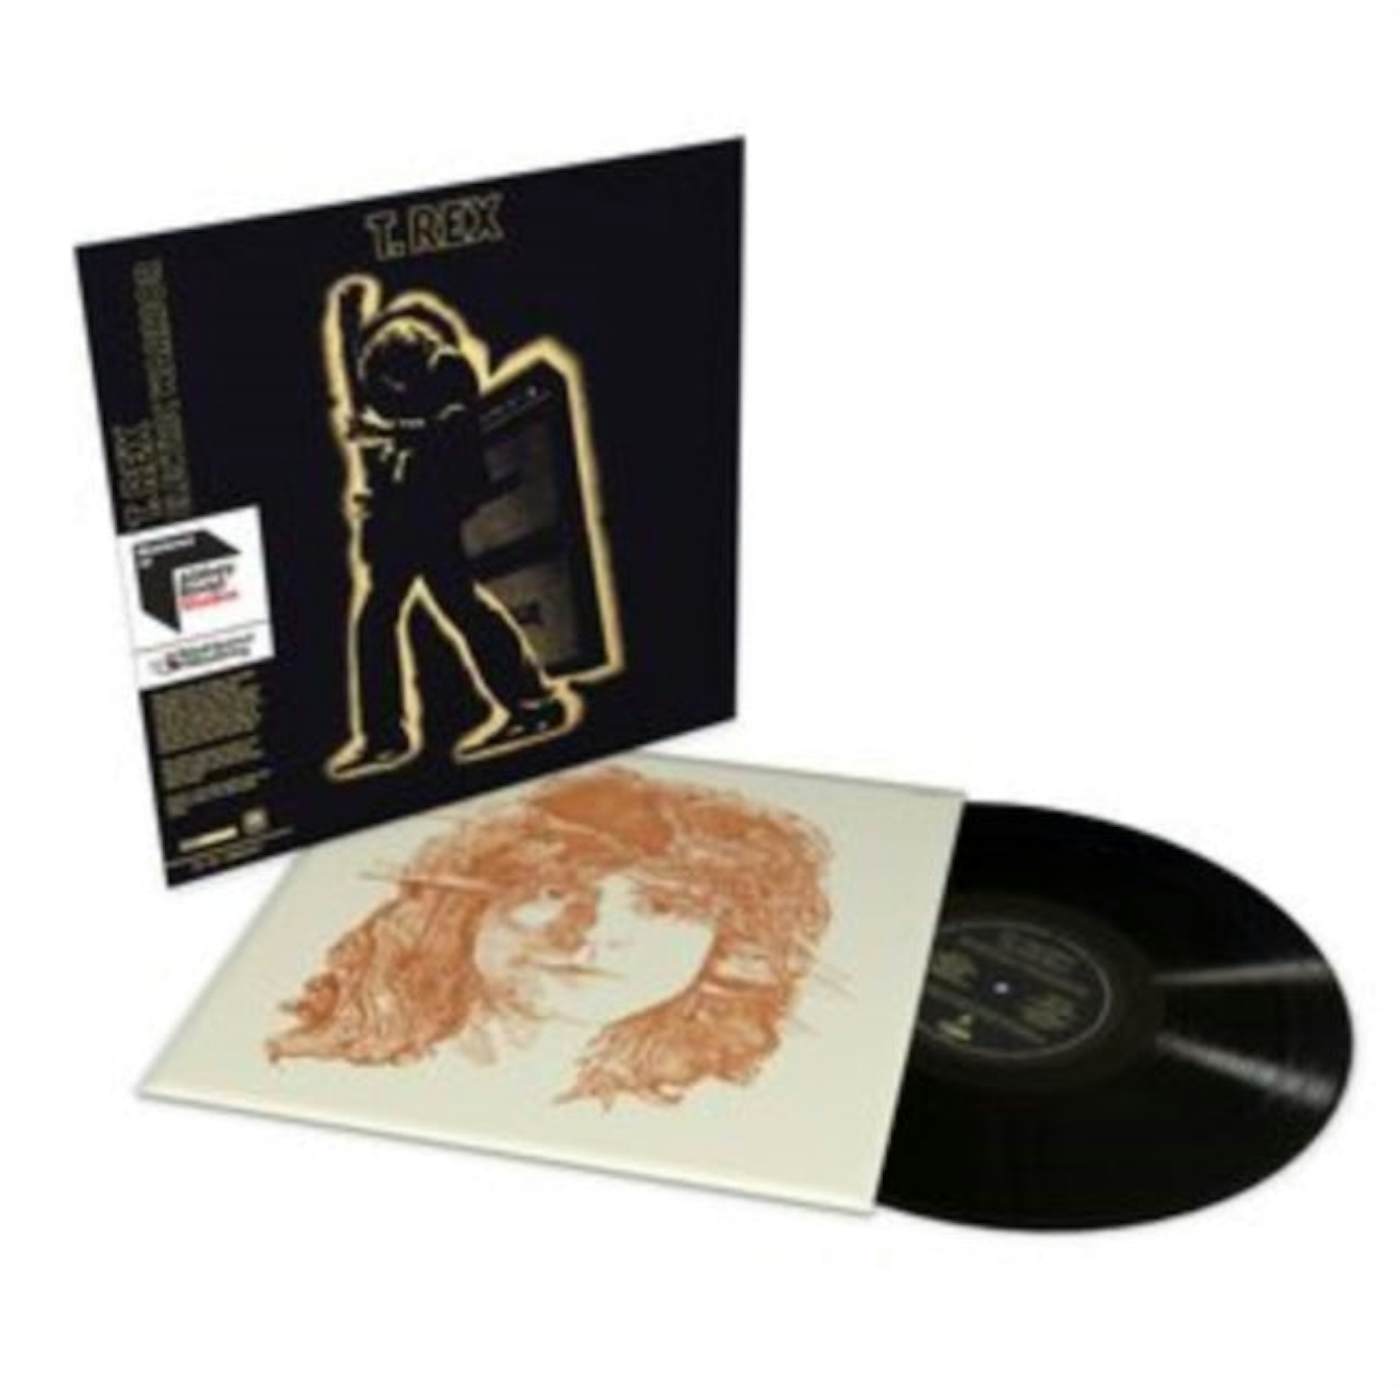 T. Rex LP Vinyl Record - Electric Warrior (Abbey Road Half Speed Master)